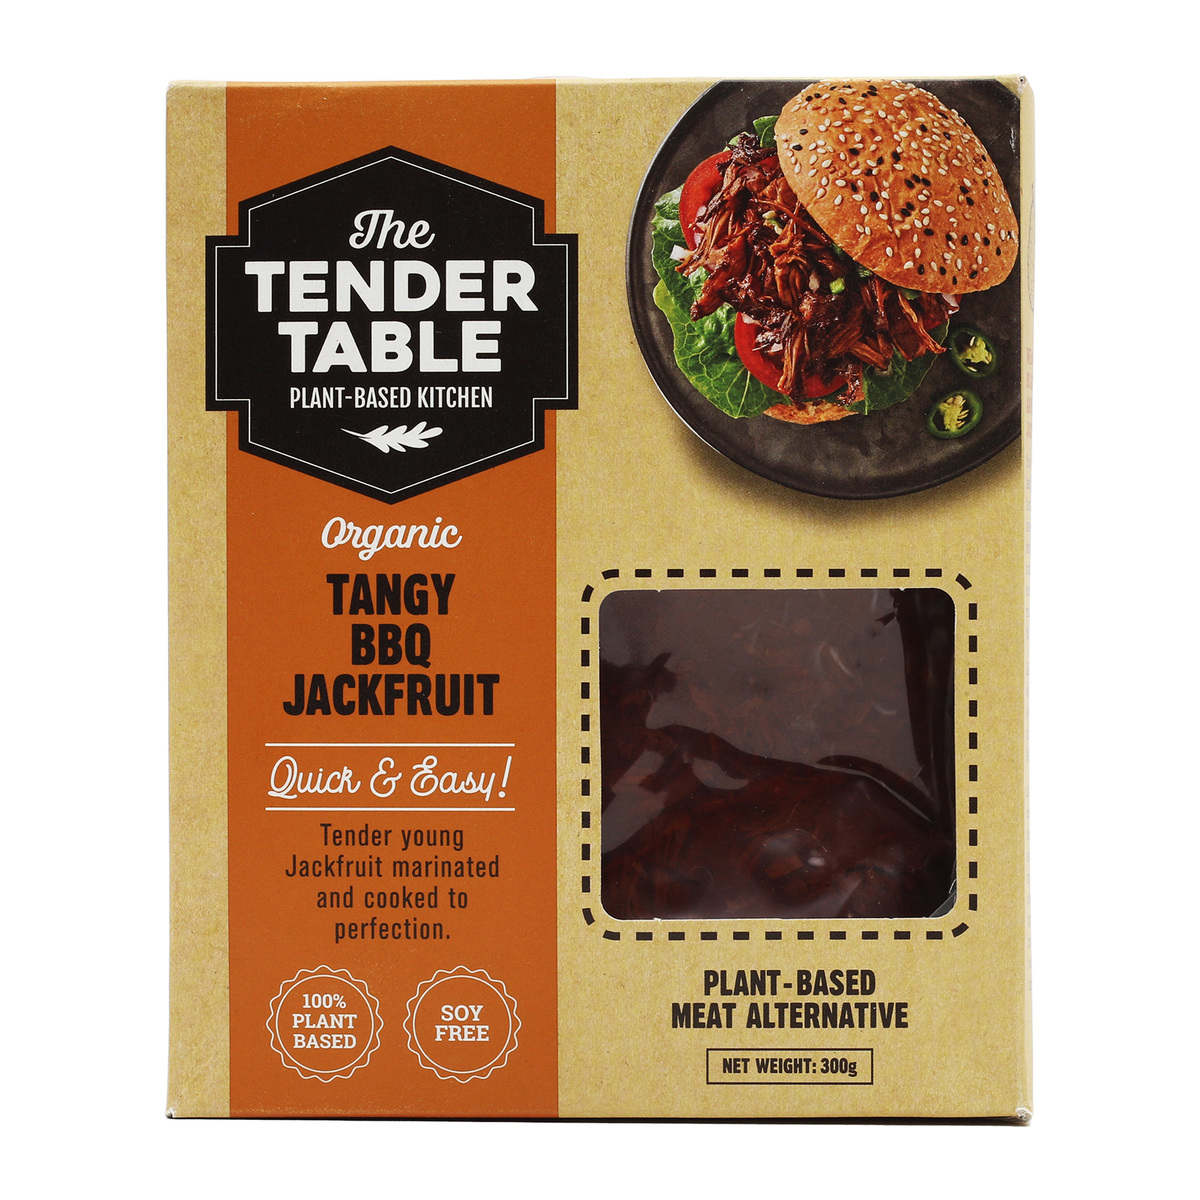 The Tender Table Organic Tangy BBQ Jackfruit 300g